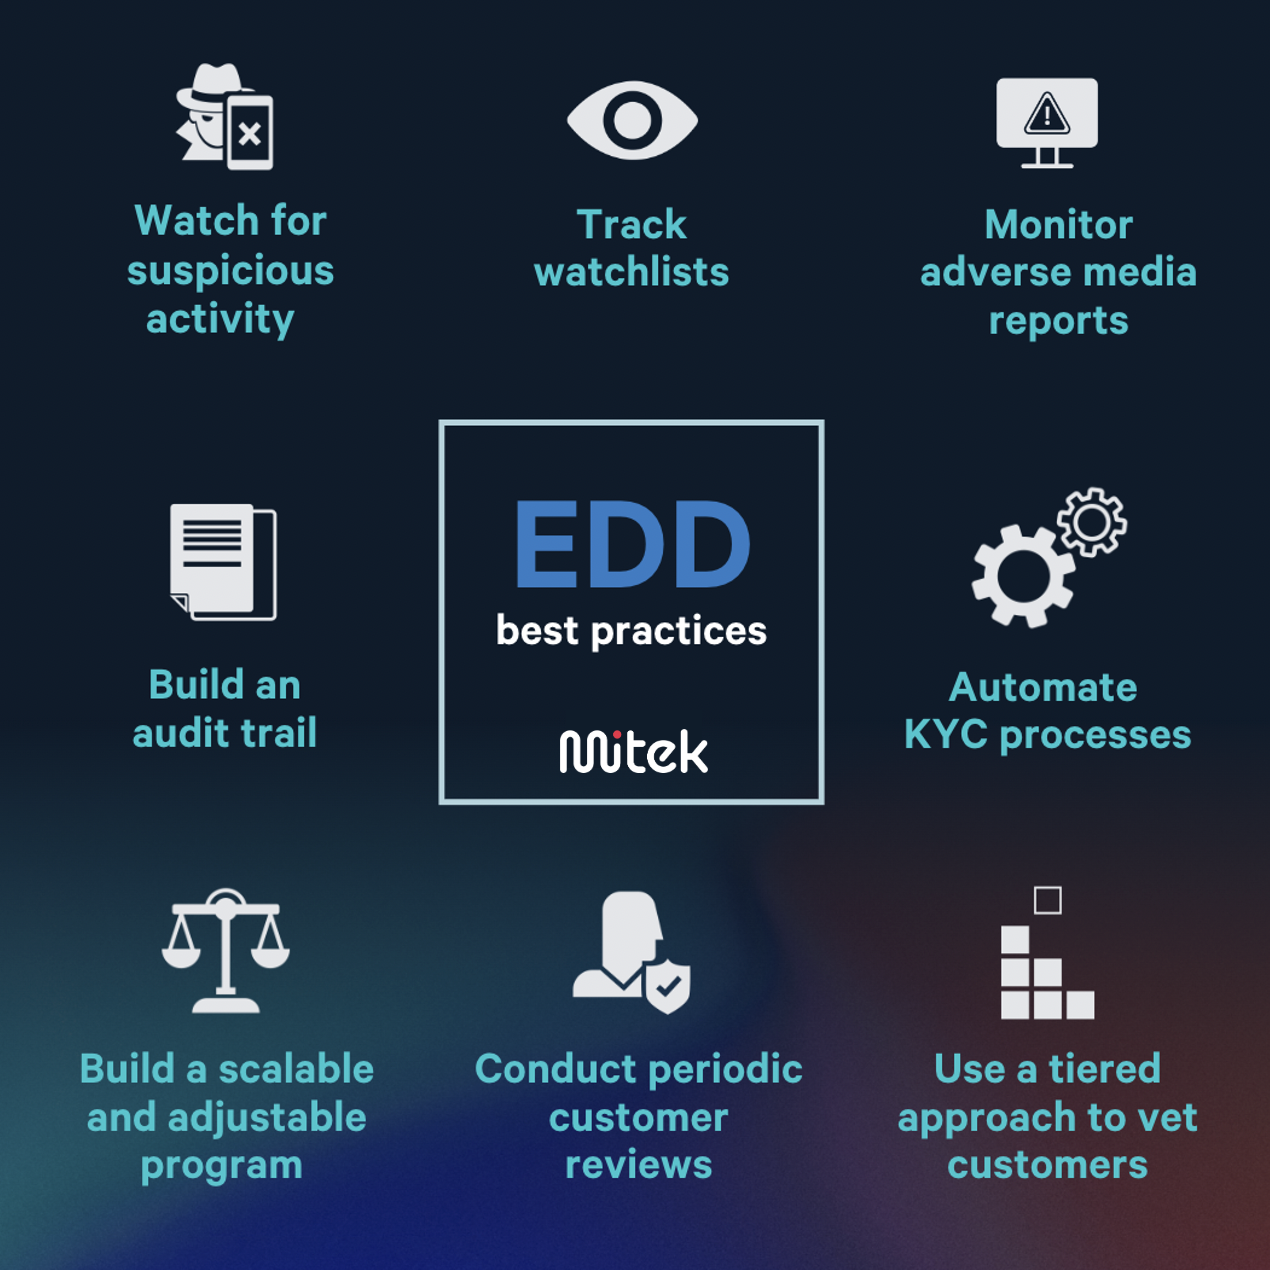 Enhanced due diligence (EDD) best practices